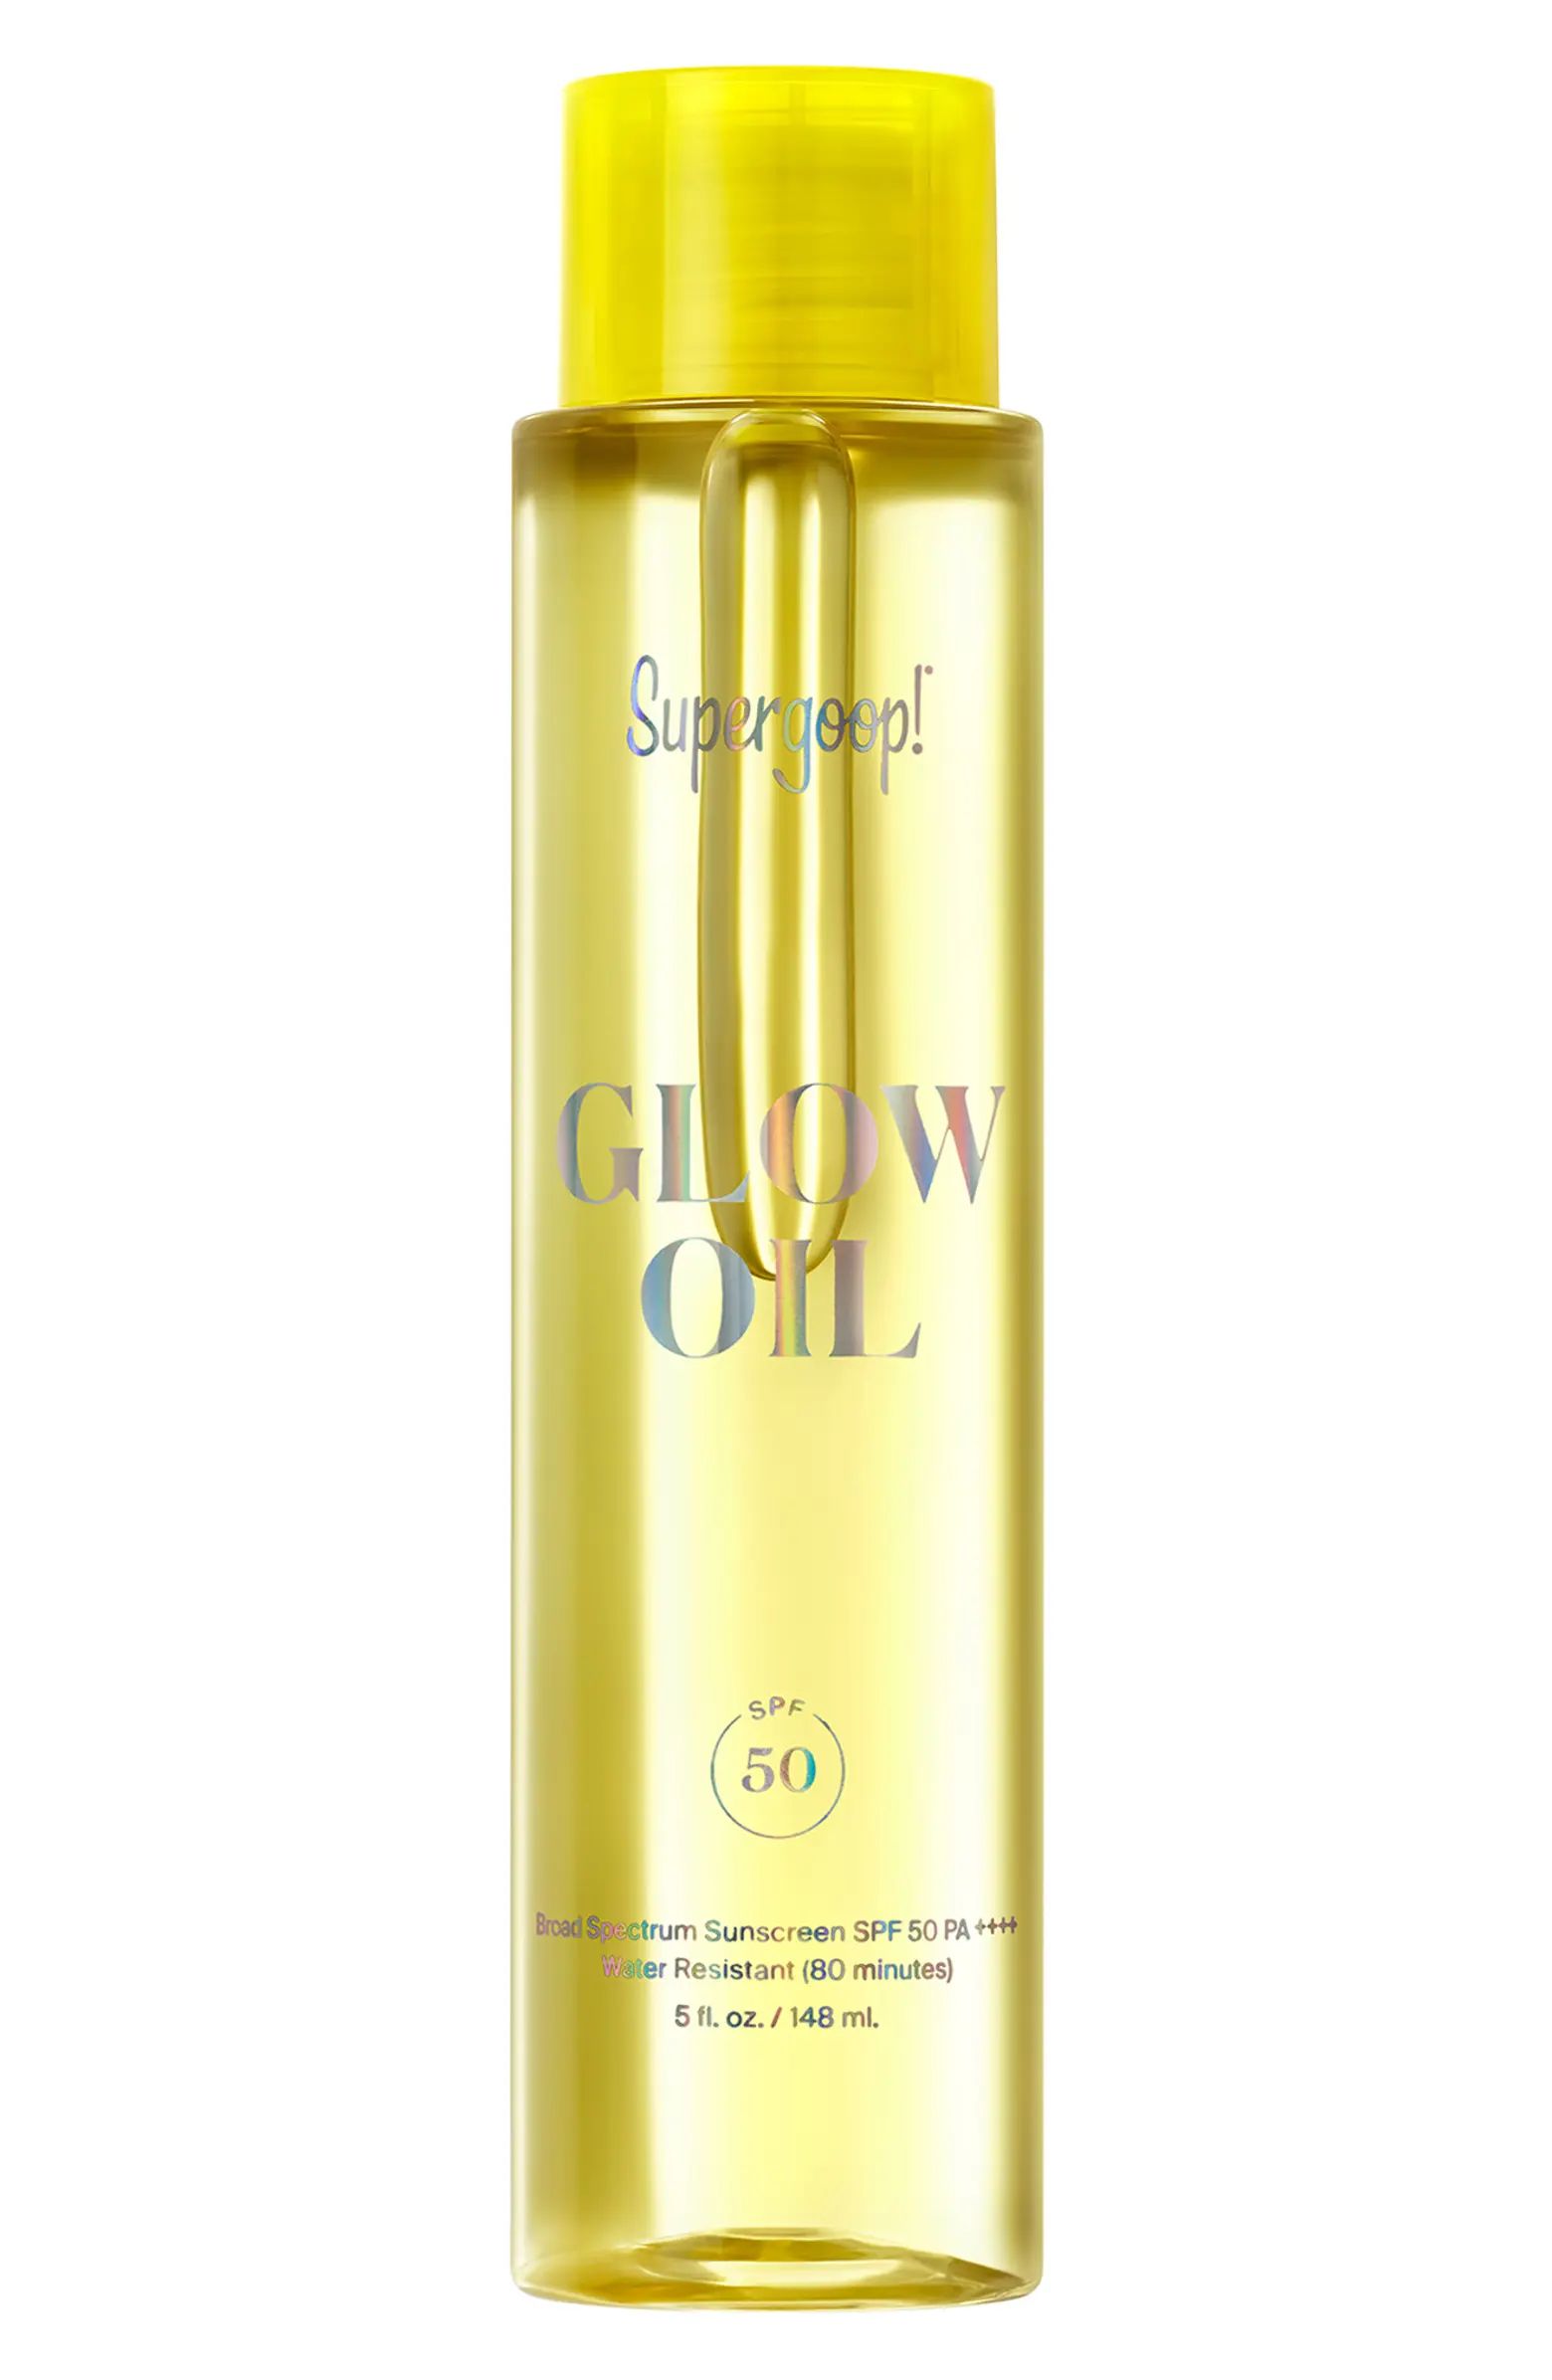 Glow Oil Body Oil SPF 50 Sunscreen | Nordstrom